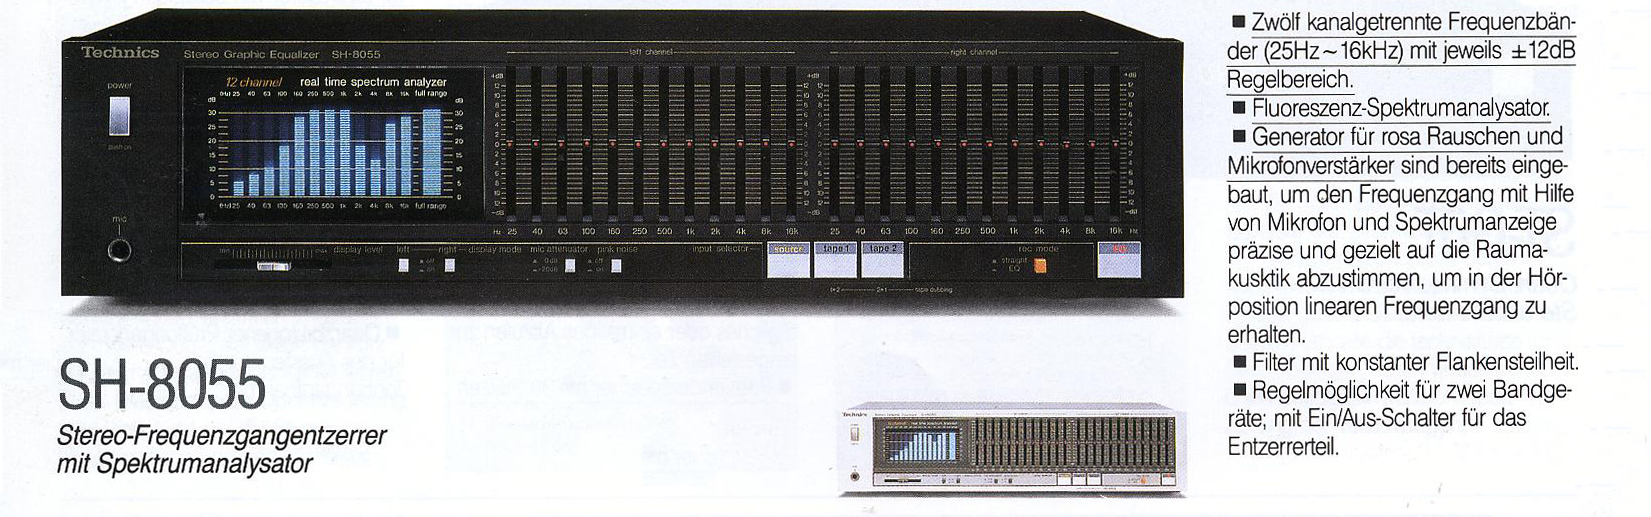 Technics SH-8055-Prospekt-1988.jpg